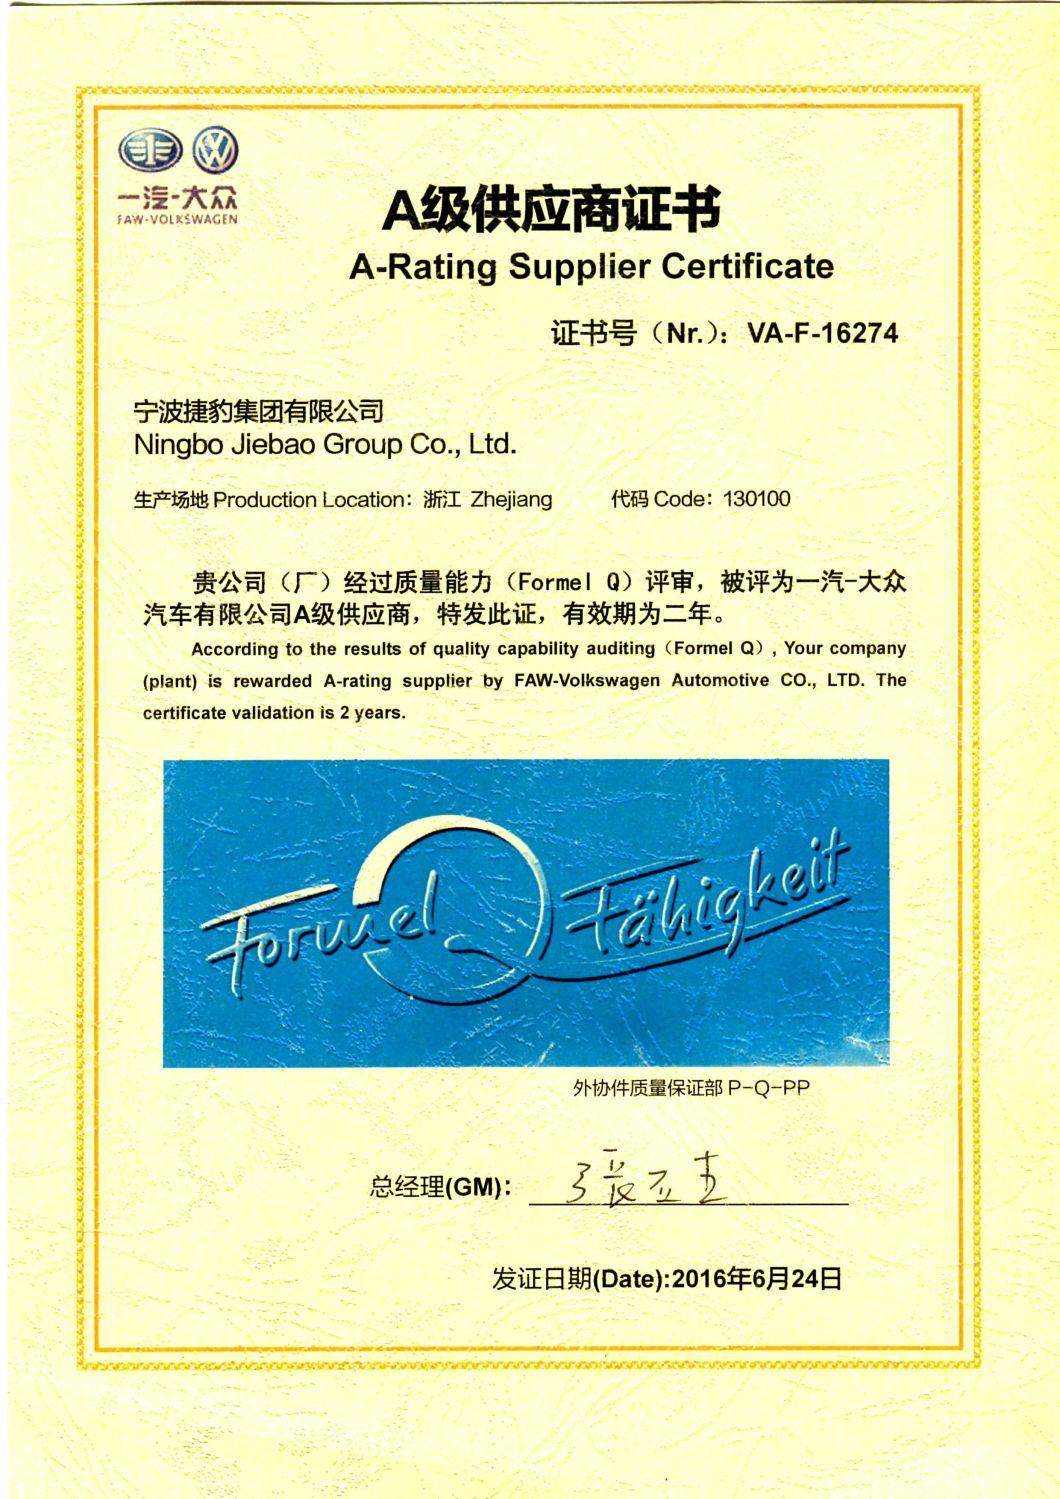 GM Belt Maker - Jiebao OEM Transmission Parts Fan Automotive Textile Garment Packaging Agricultural Machinery Htd2m Synchronous Belt